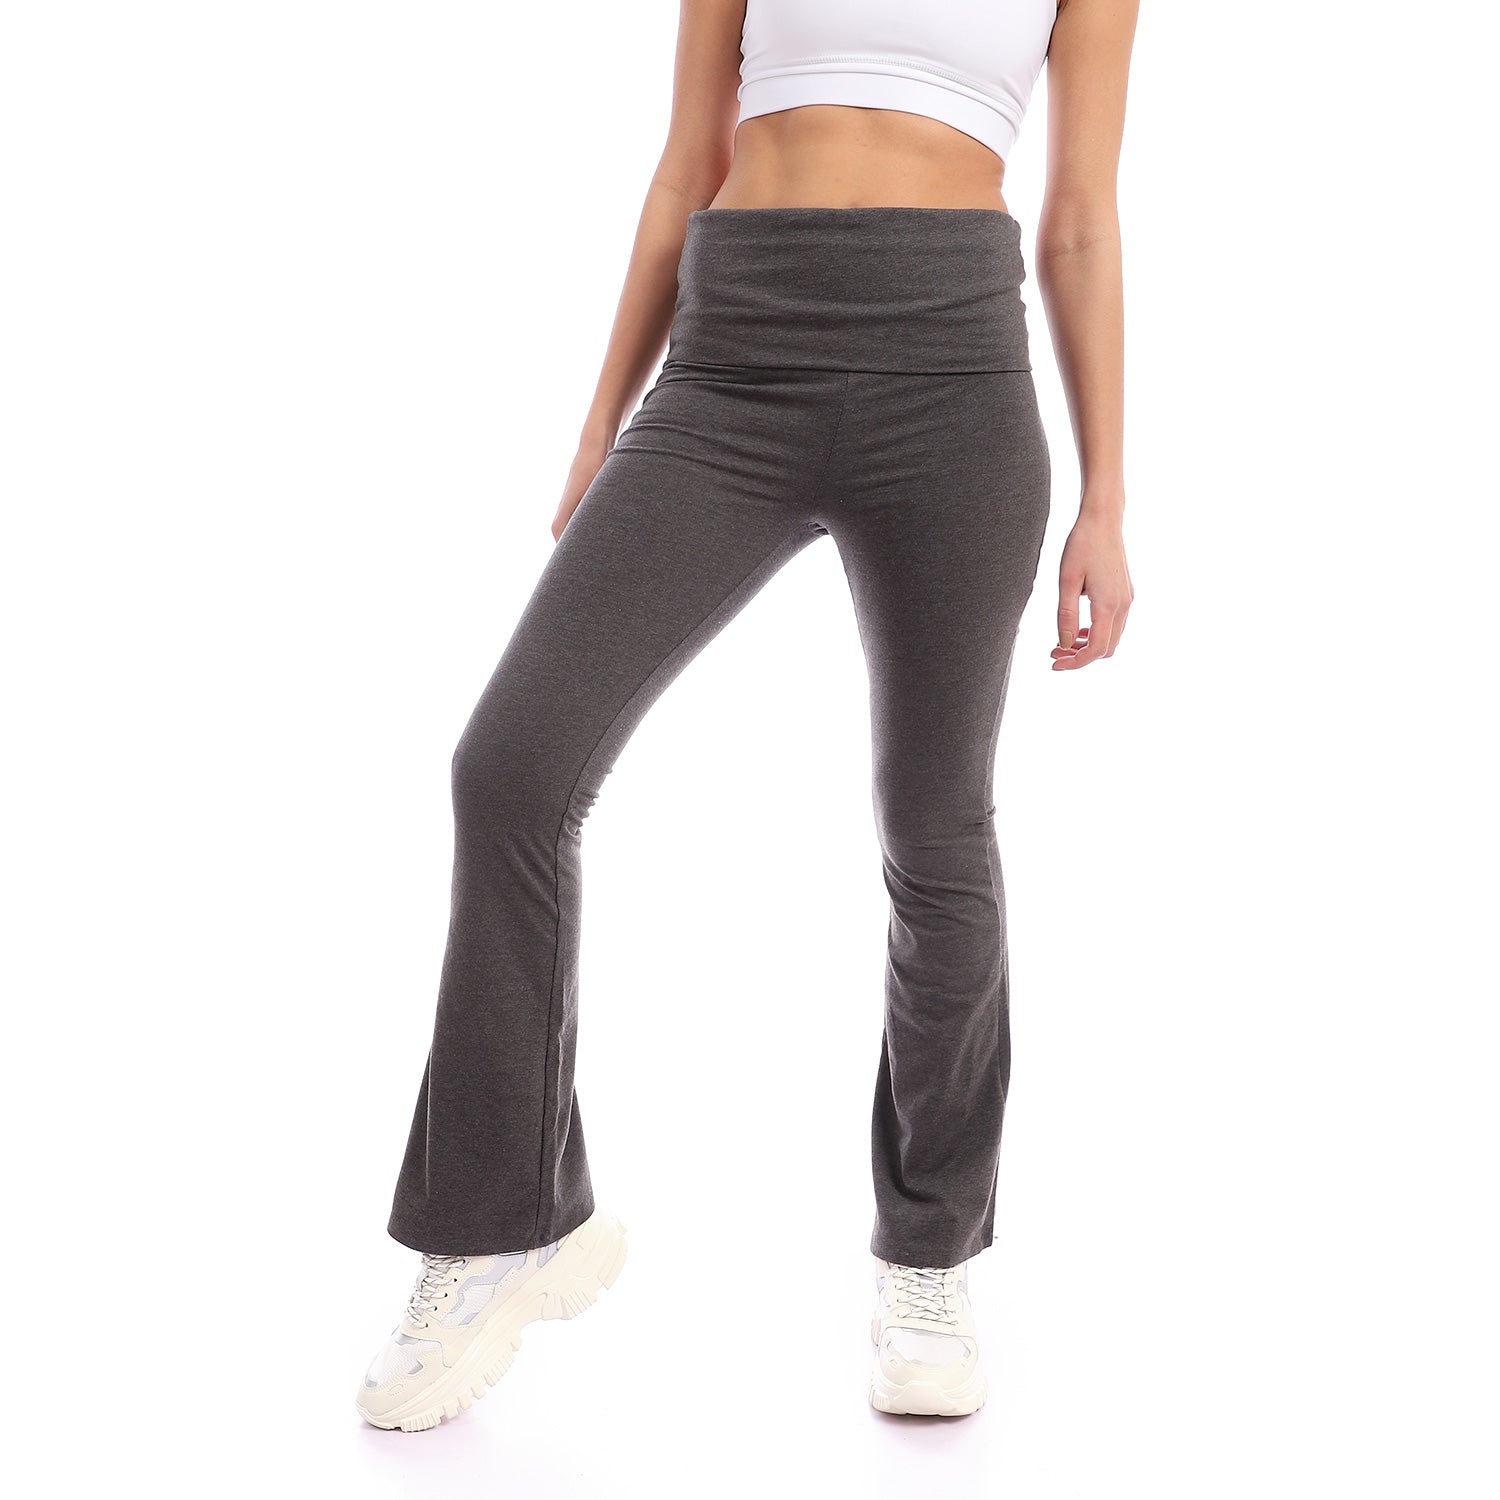 Baocc Yoga Pants Yoga Pants Breathable and Dot Pants Lift Tight Absorbent  Exercise Polka Yoga Pants Pants for Women Gray 